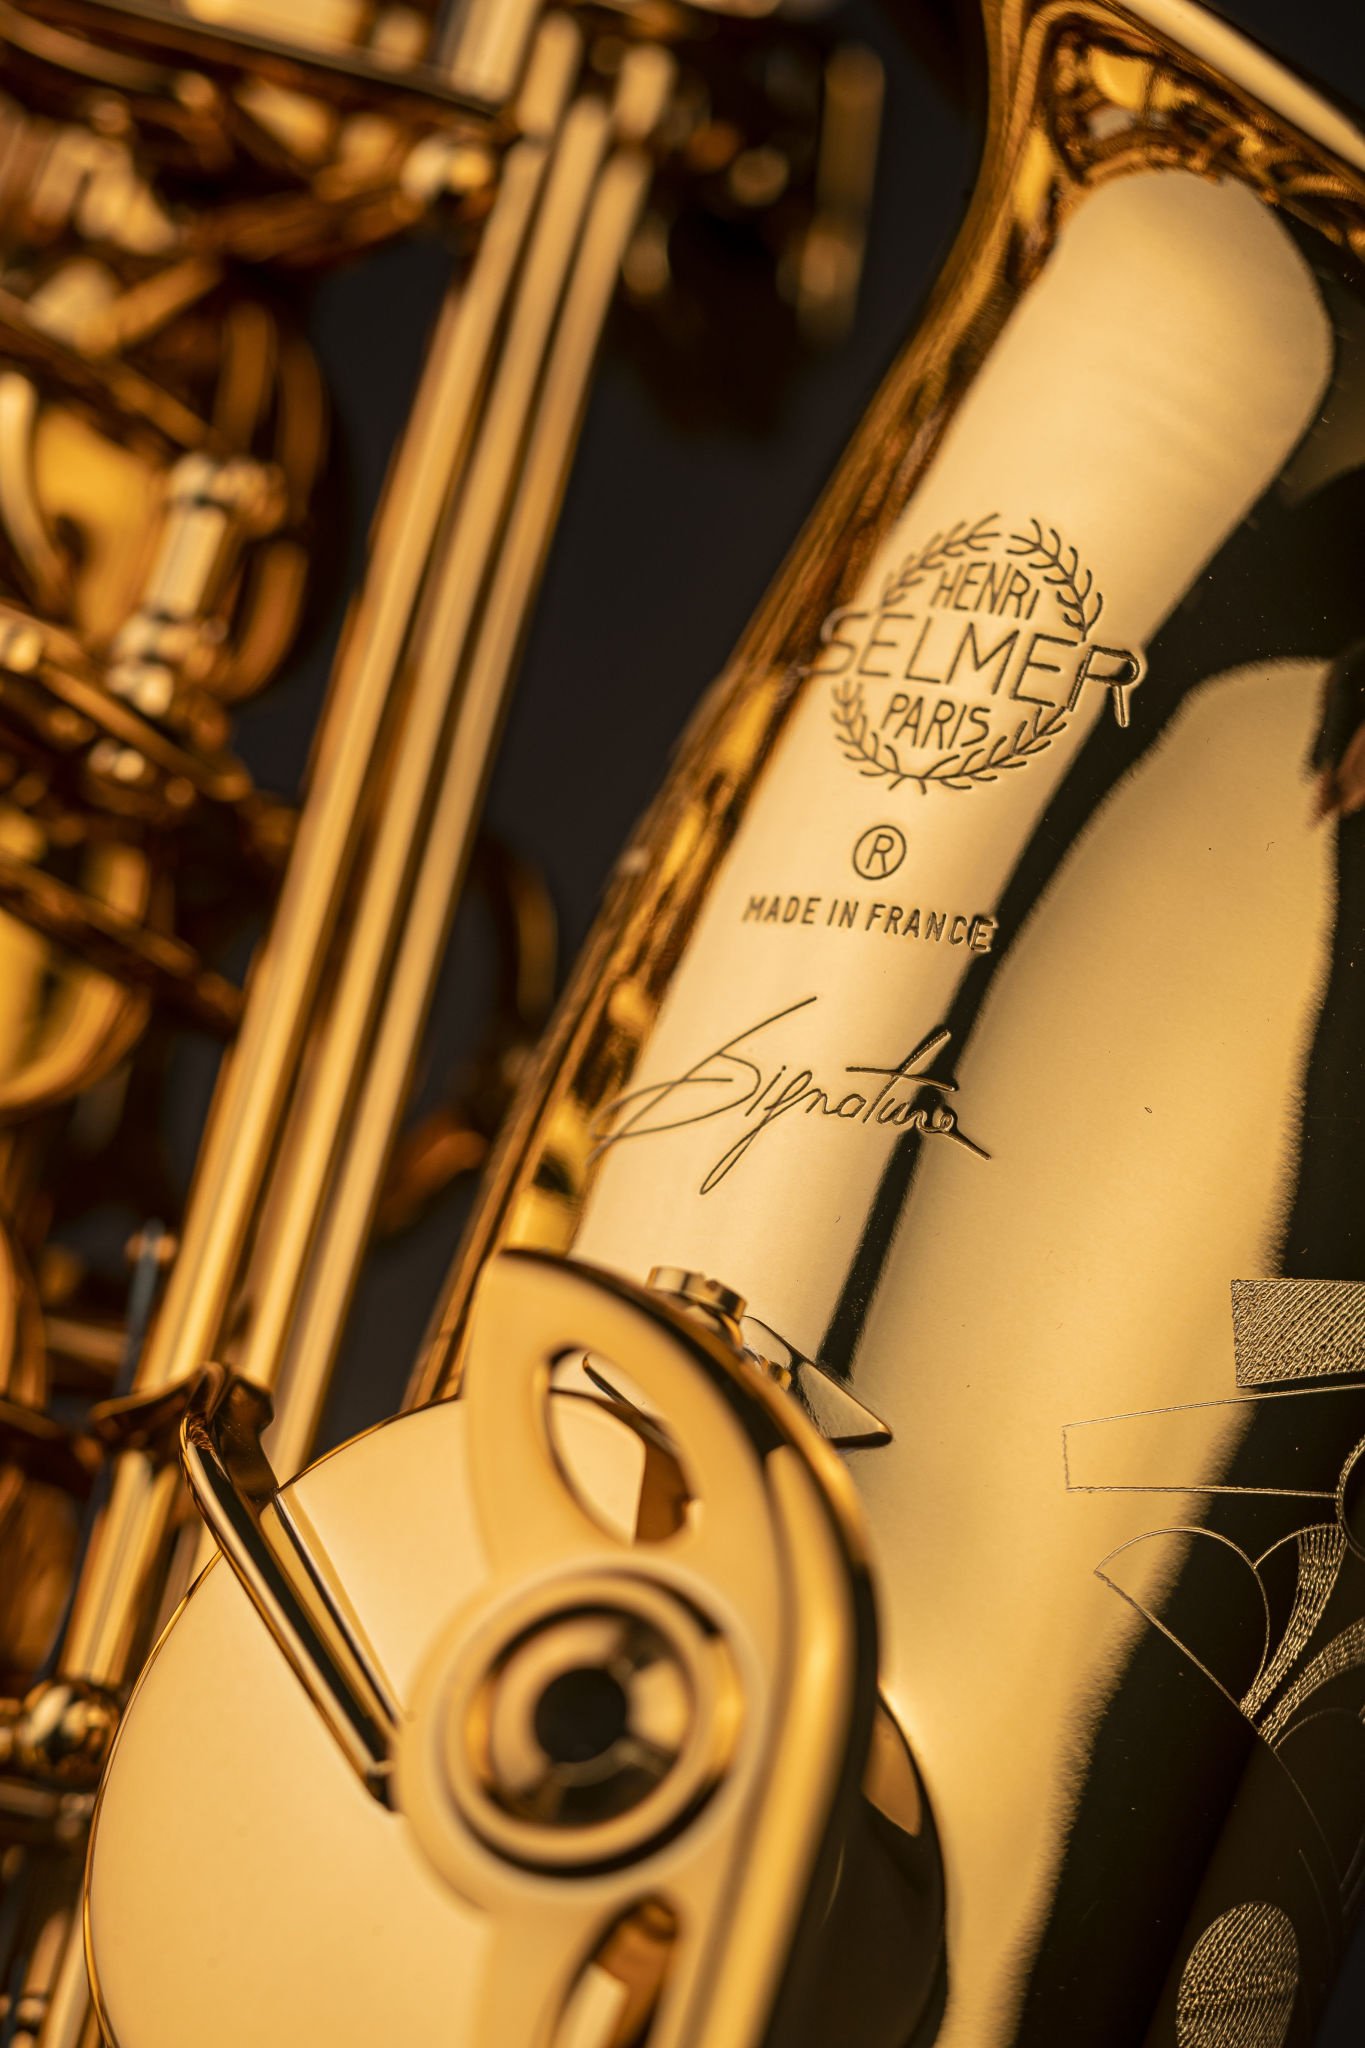 Selmer Supreme Alto Saxophone With Brushed Finish